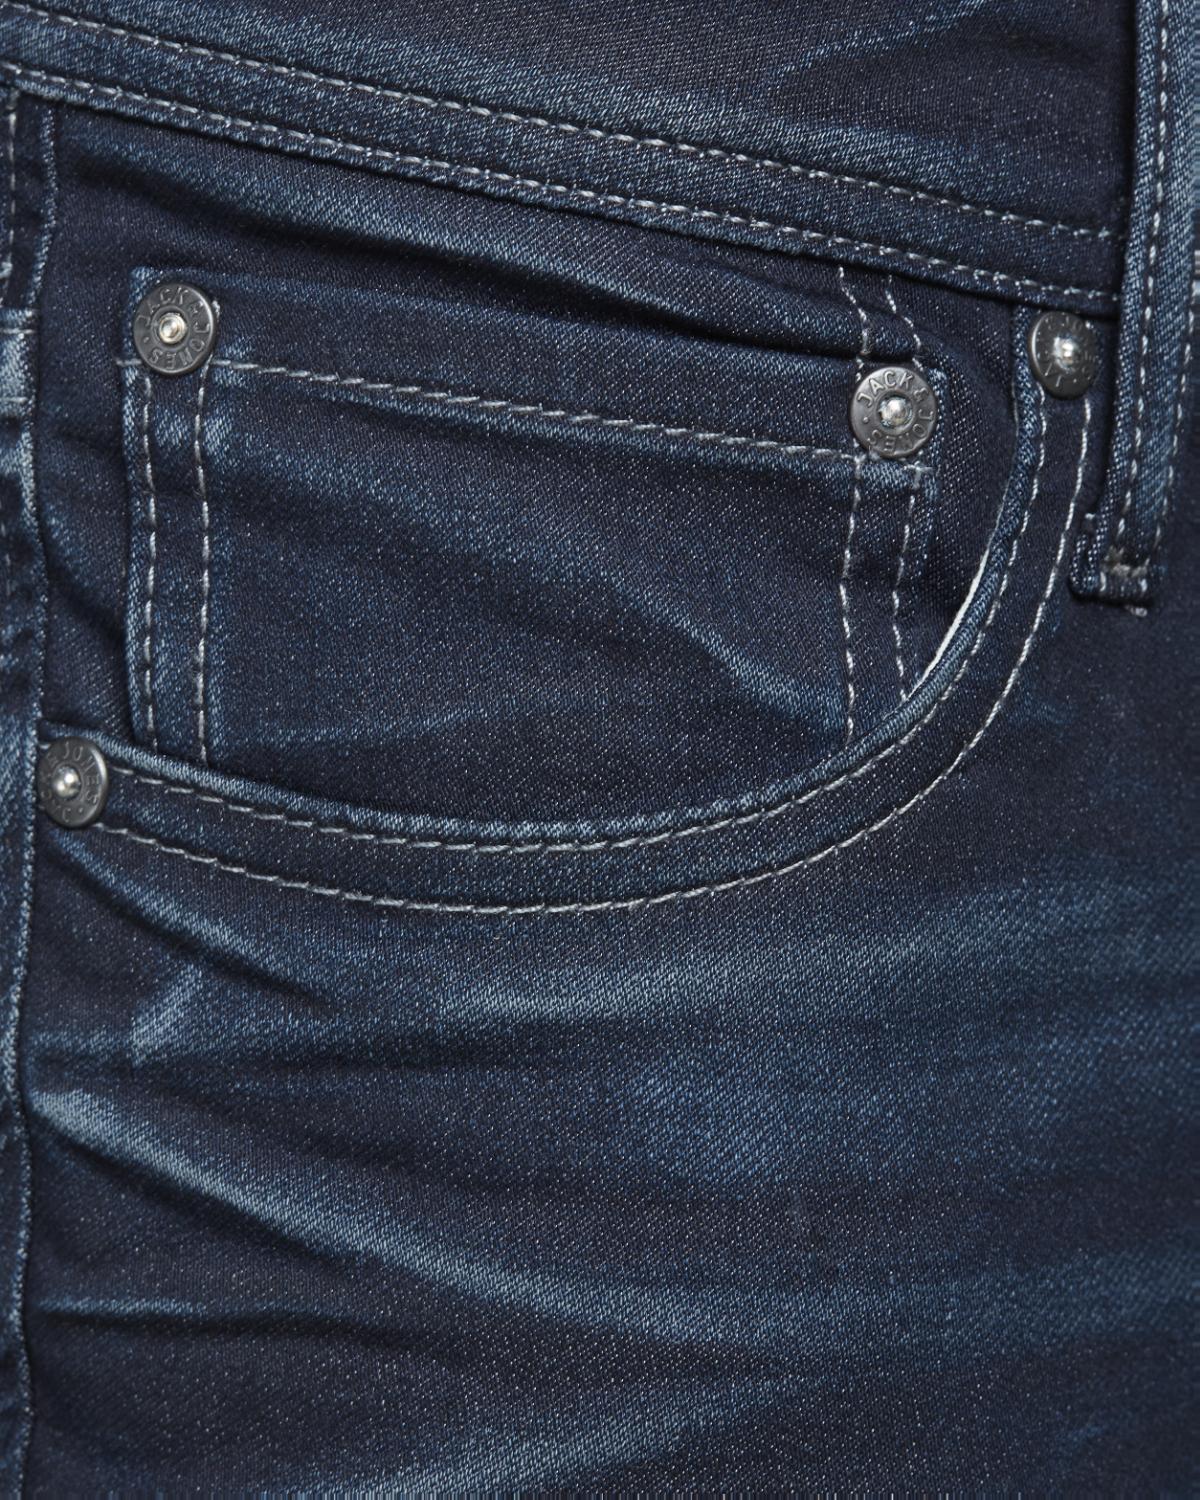 Jeans Jack And Jones Knit Jeans Mens Mike Comfort Fit Narrow Leg Denim Pants Dark Blue Men S Jeans